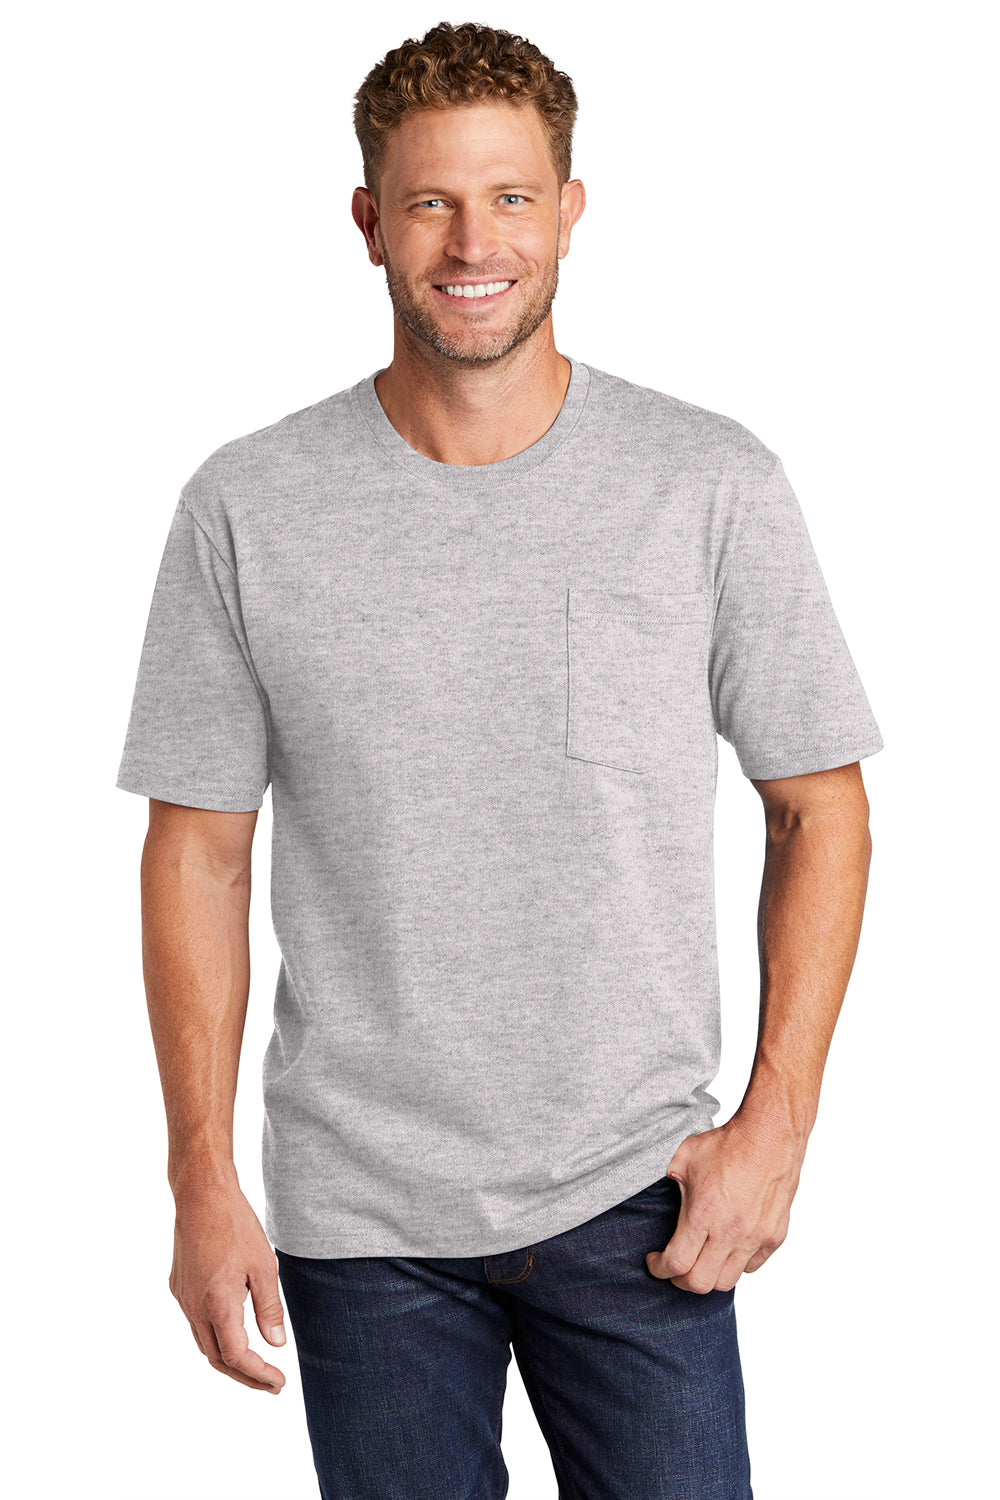 CornerStone Mens Short Sleeve Crewneck T-Shirt w/ Pocket Heather Grey Front